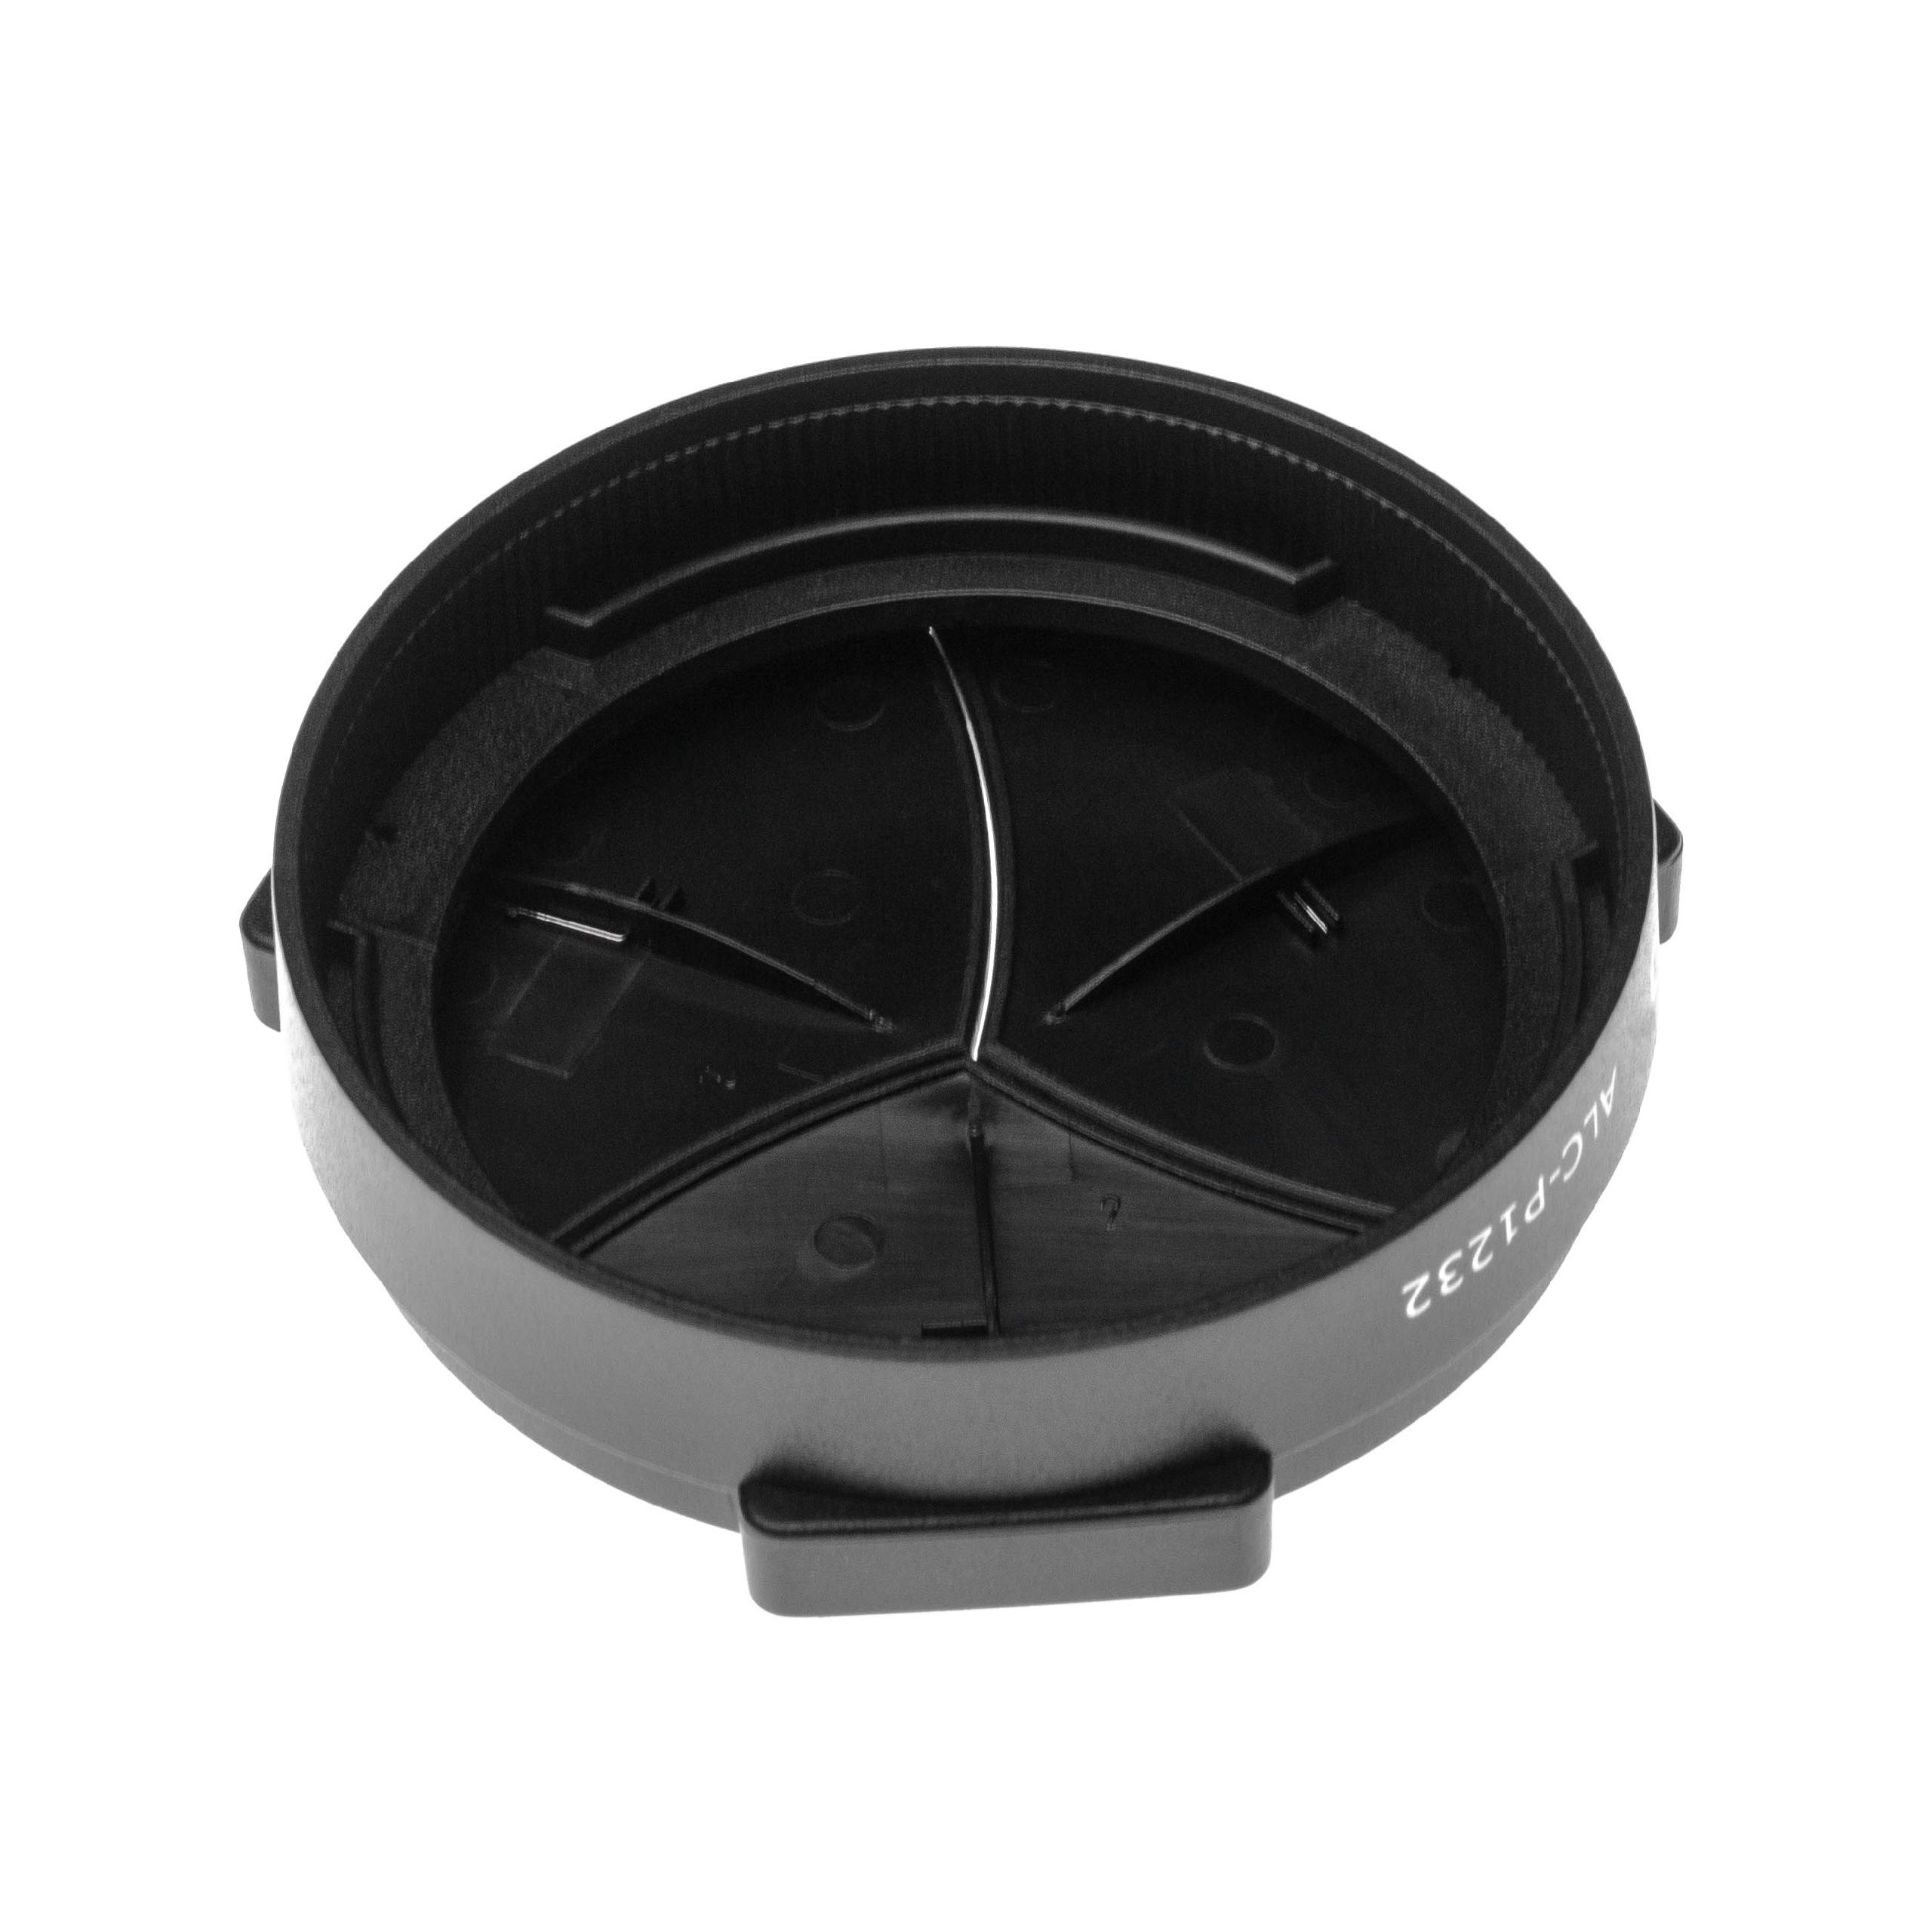 Automatic Lens Cap - Plastic, Black